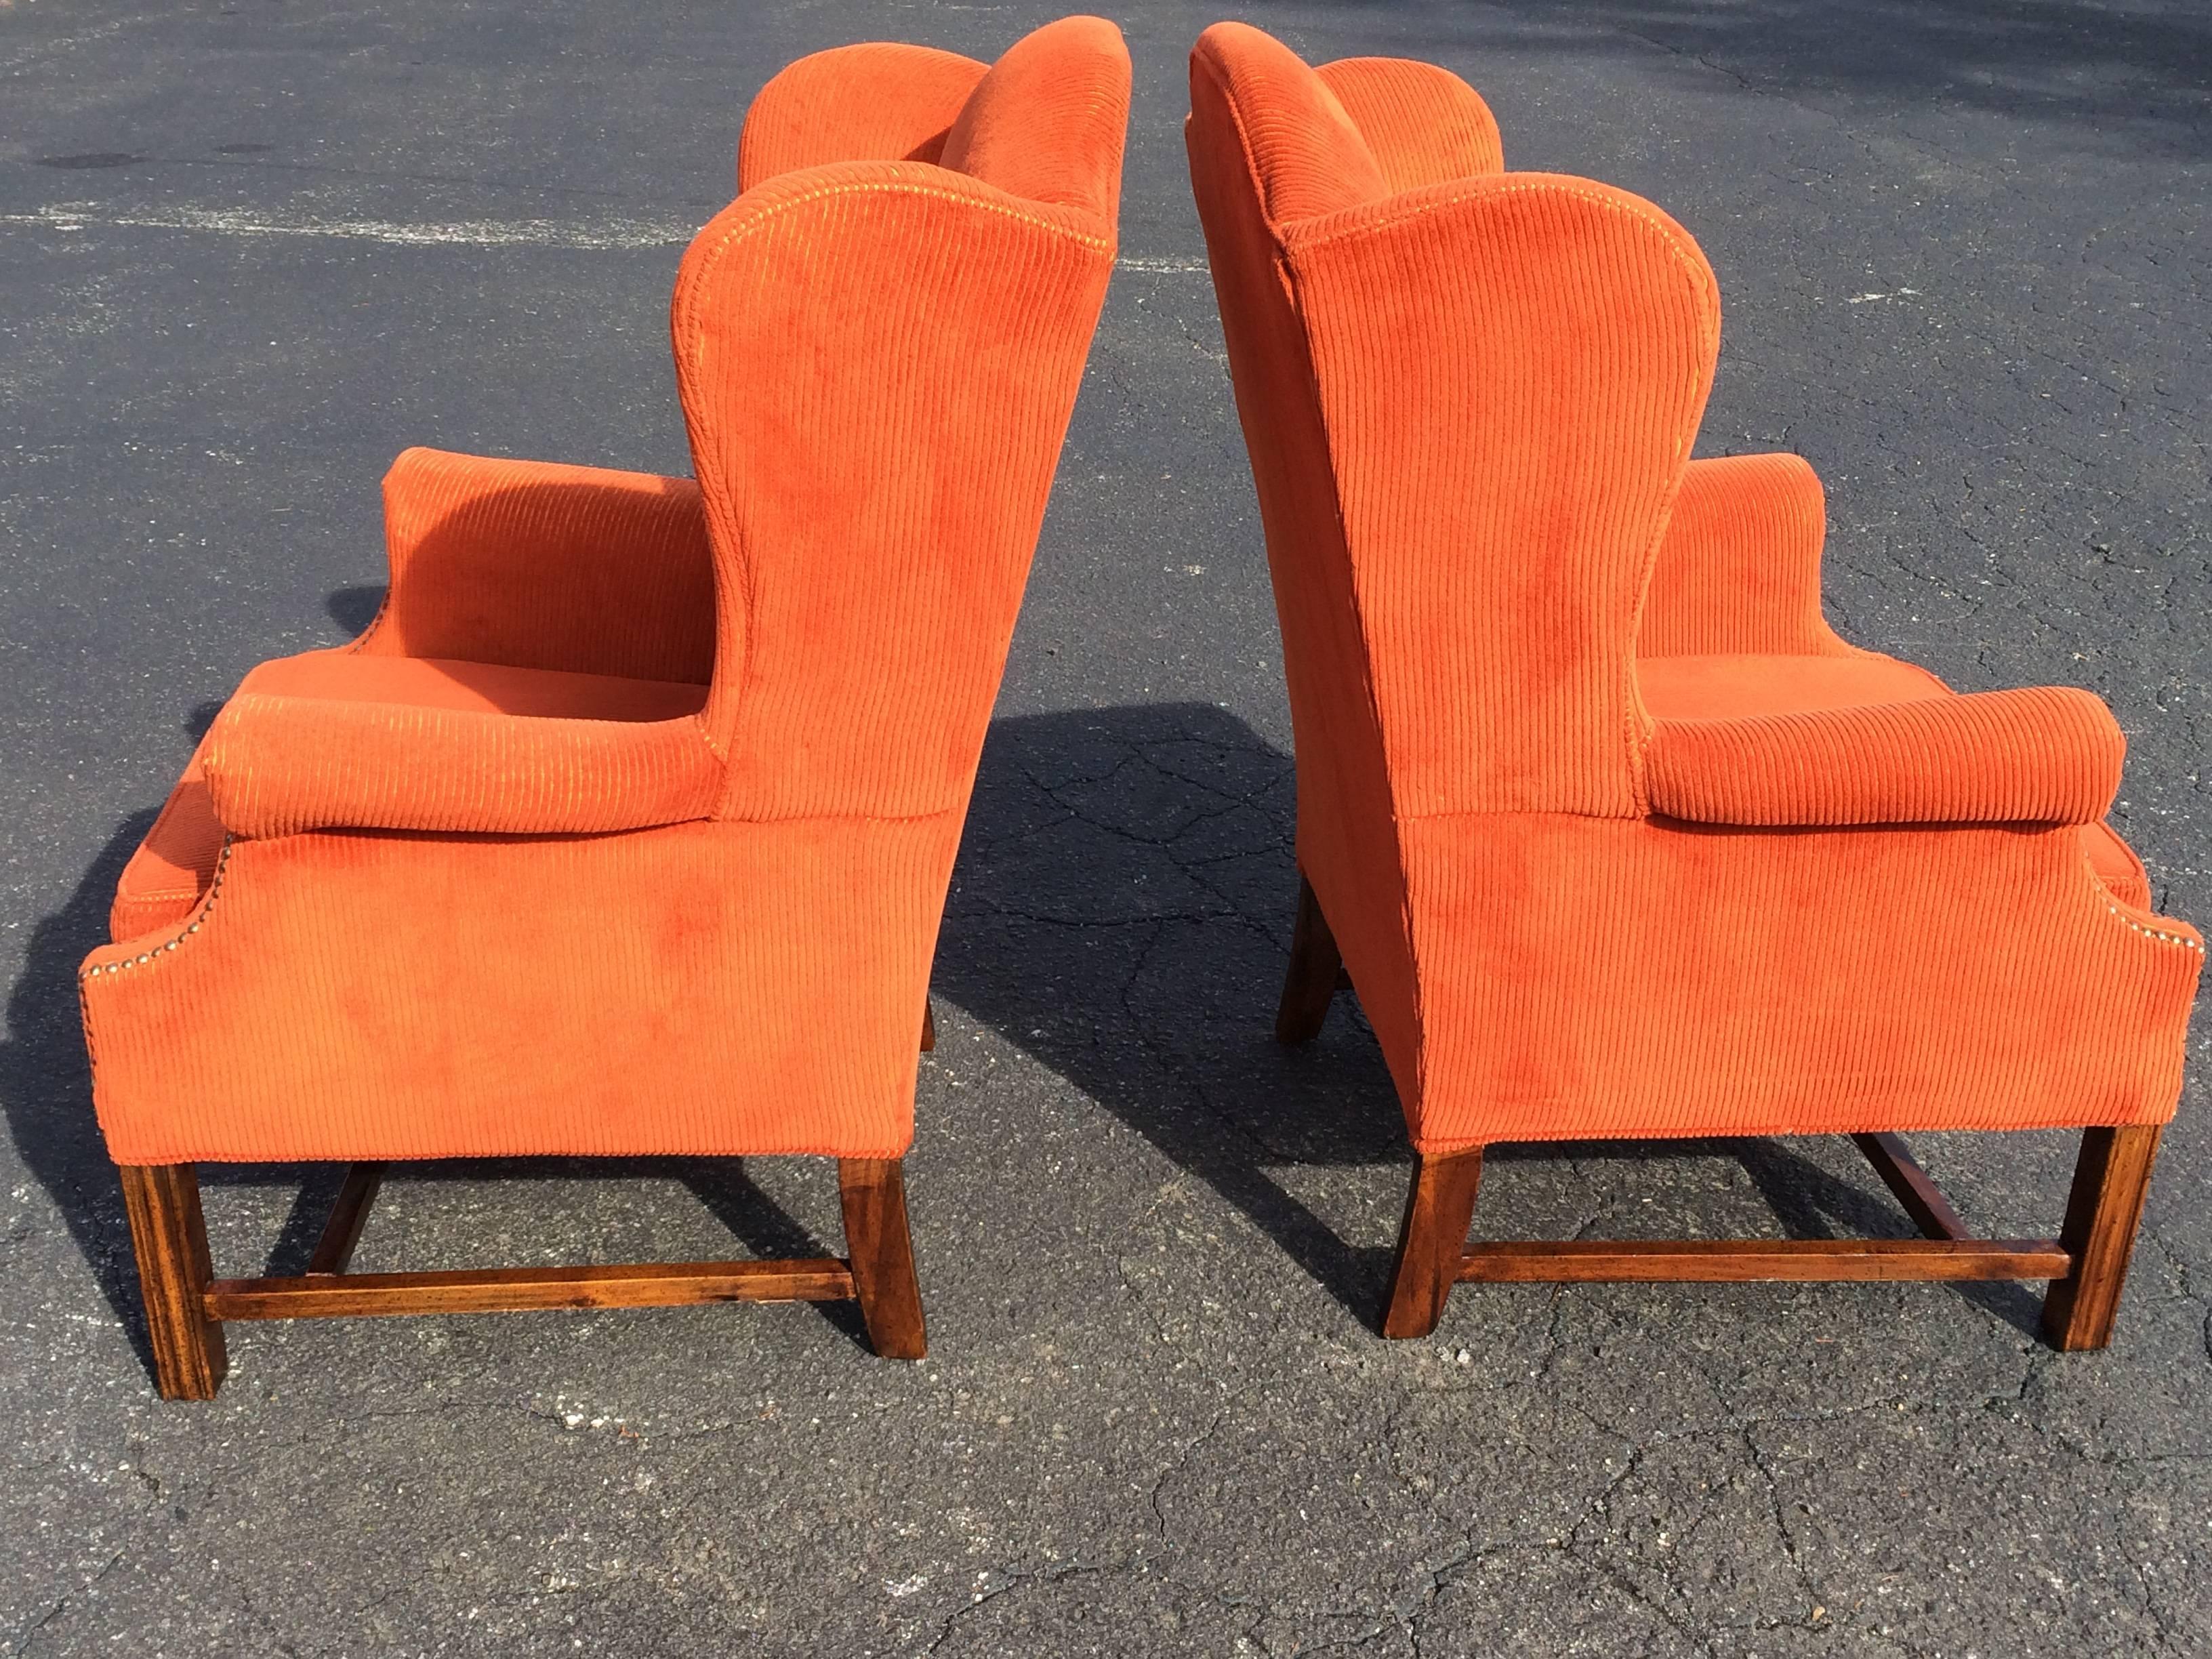 Pair of Orange Corduroy Wing Back Chairs 1